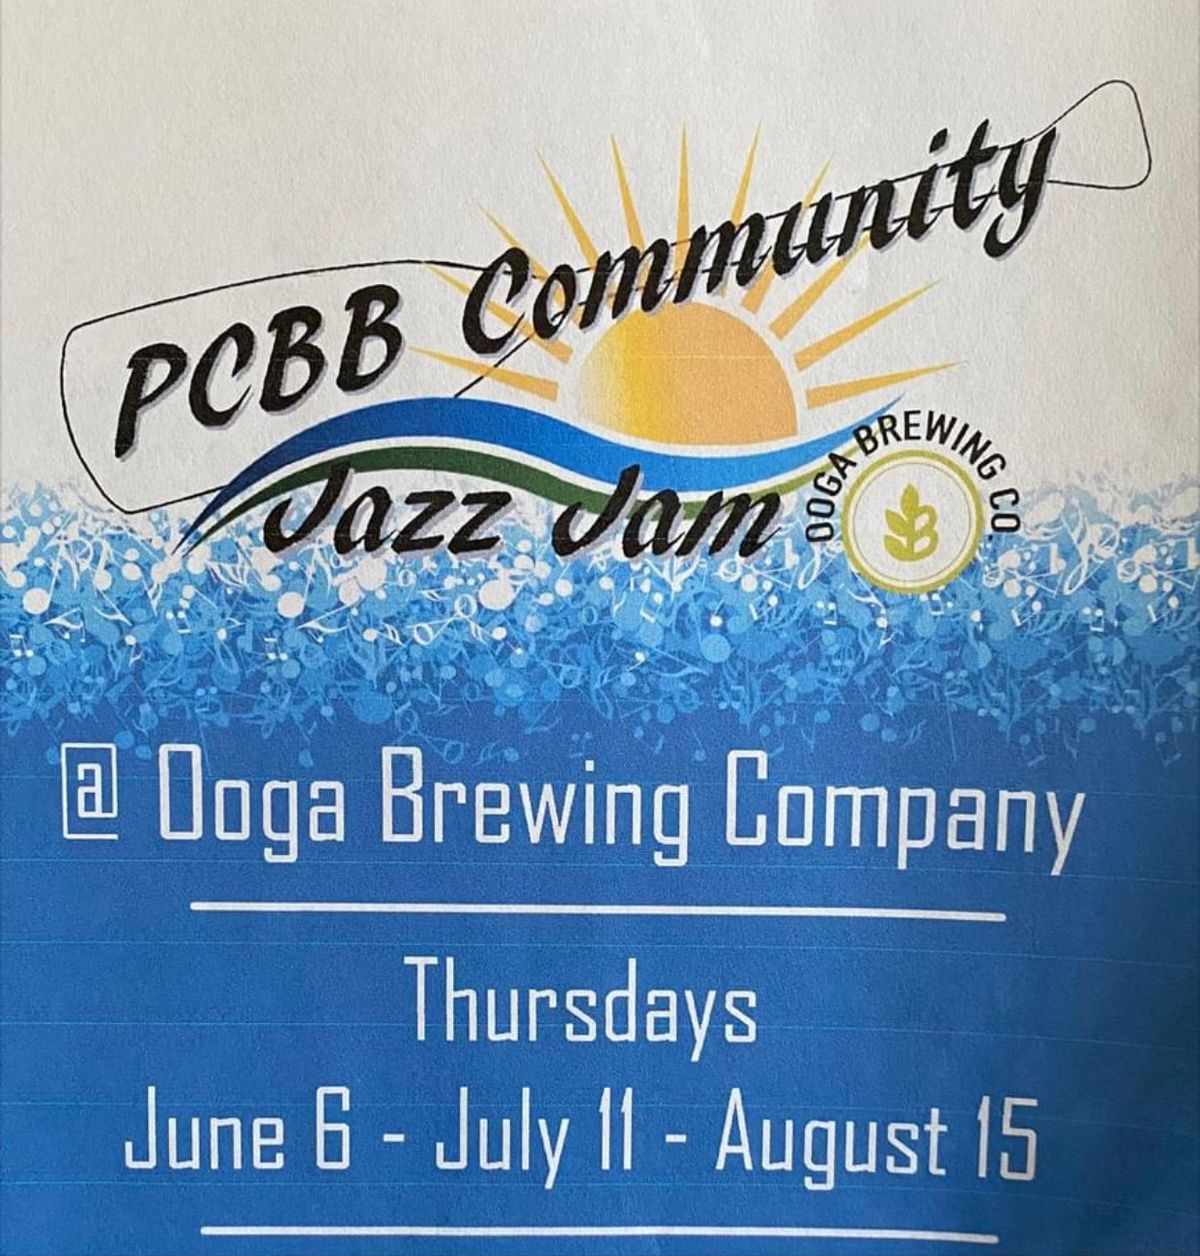 PCBB Community Jazz Jam